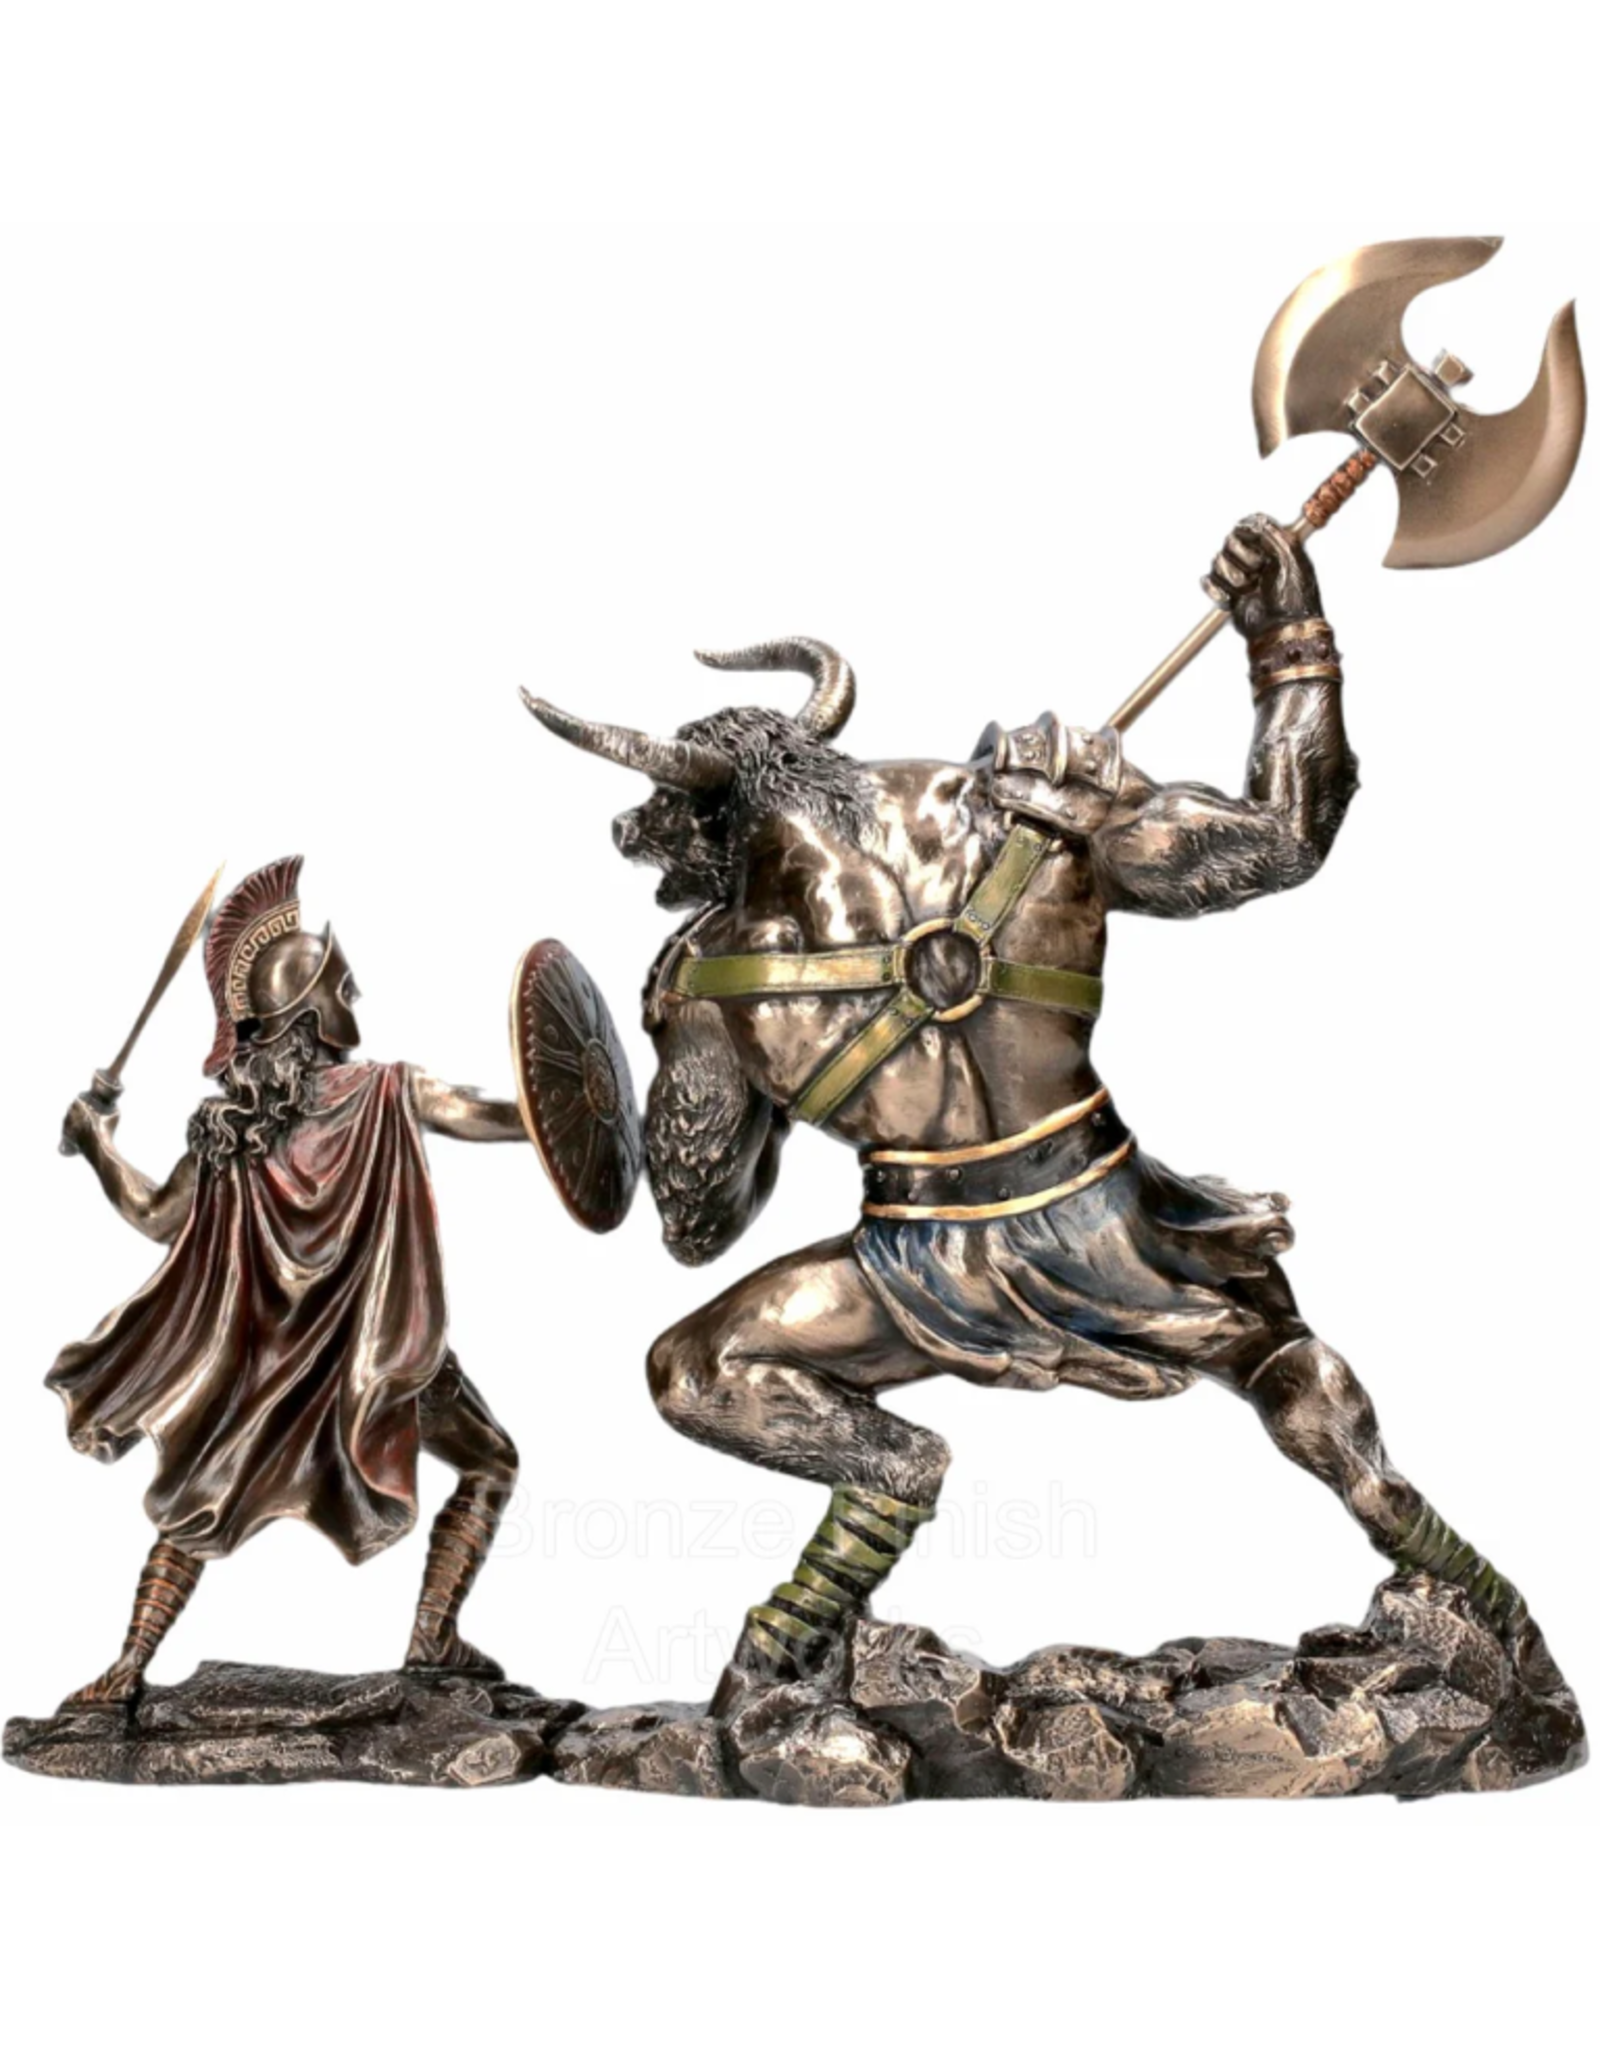 Veronese Design Giftware & Lifestyle - Theseus and Minotaur Battle figurine Veronese Design